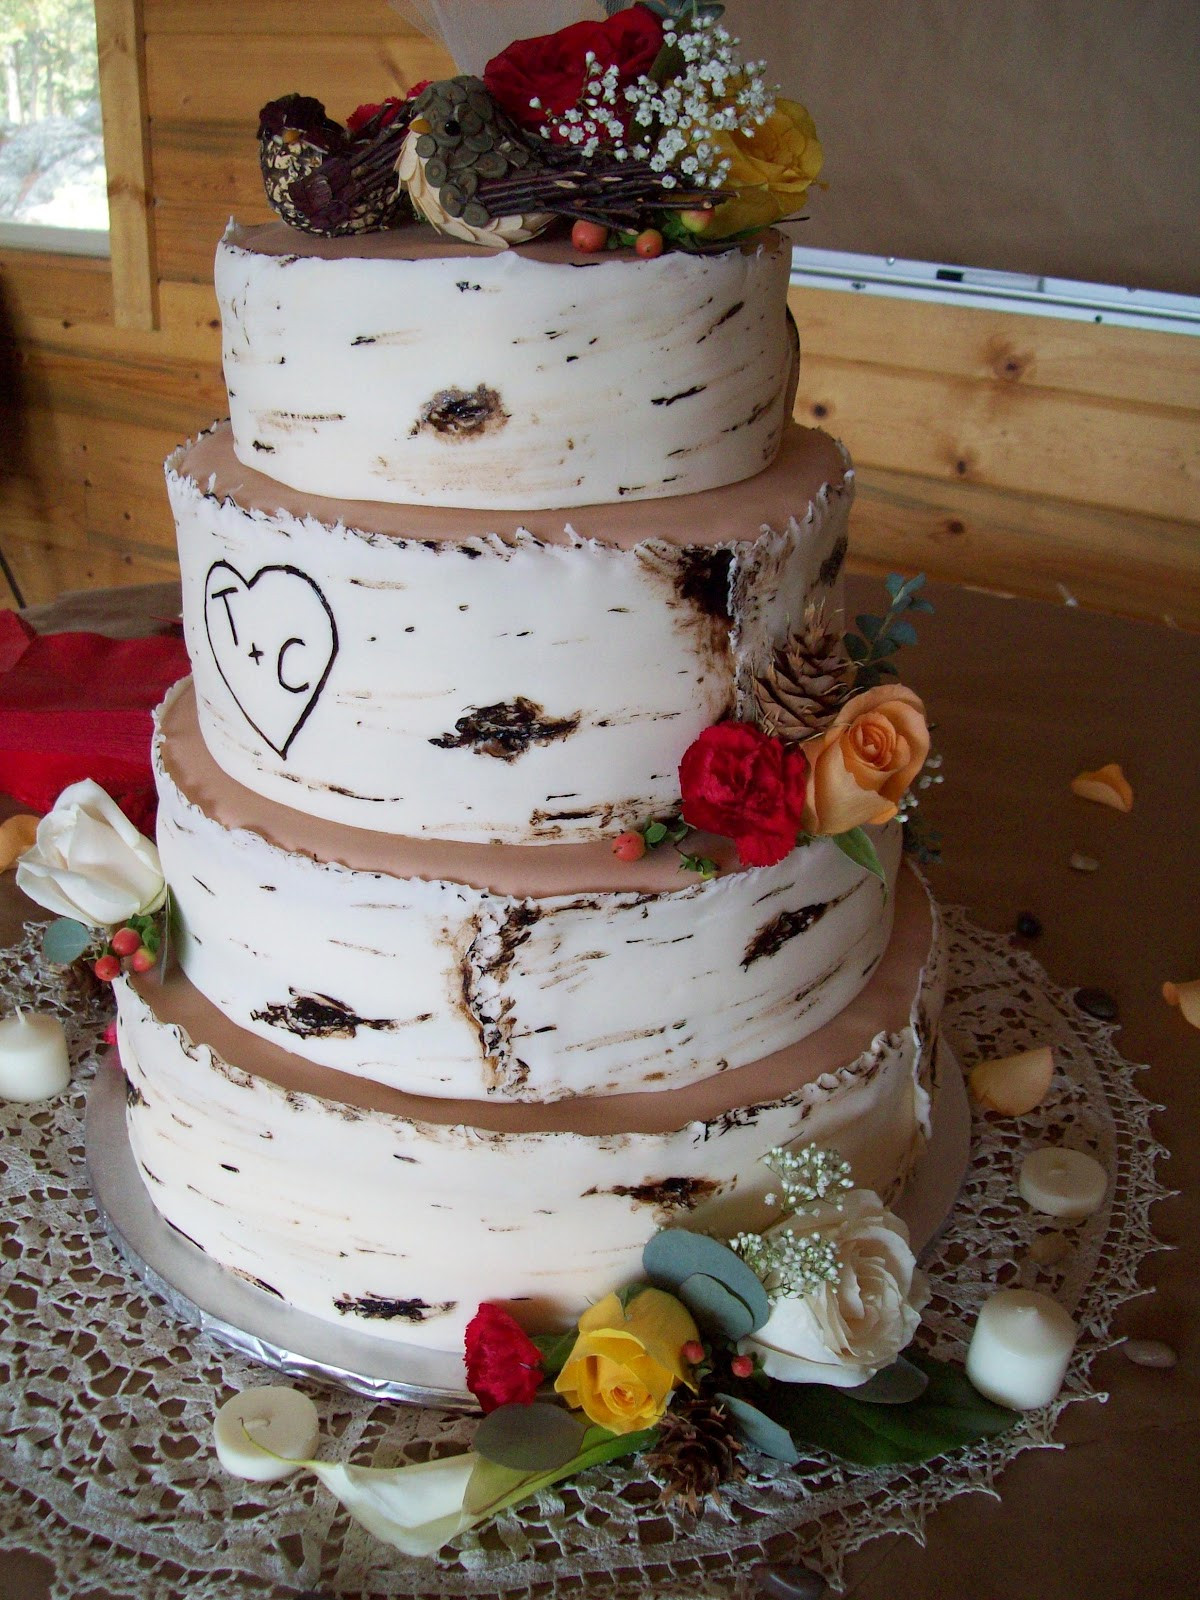 Cheesecake Wedding Cakes
 The Frosting Posey Aspen Wedding Cake